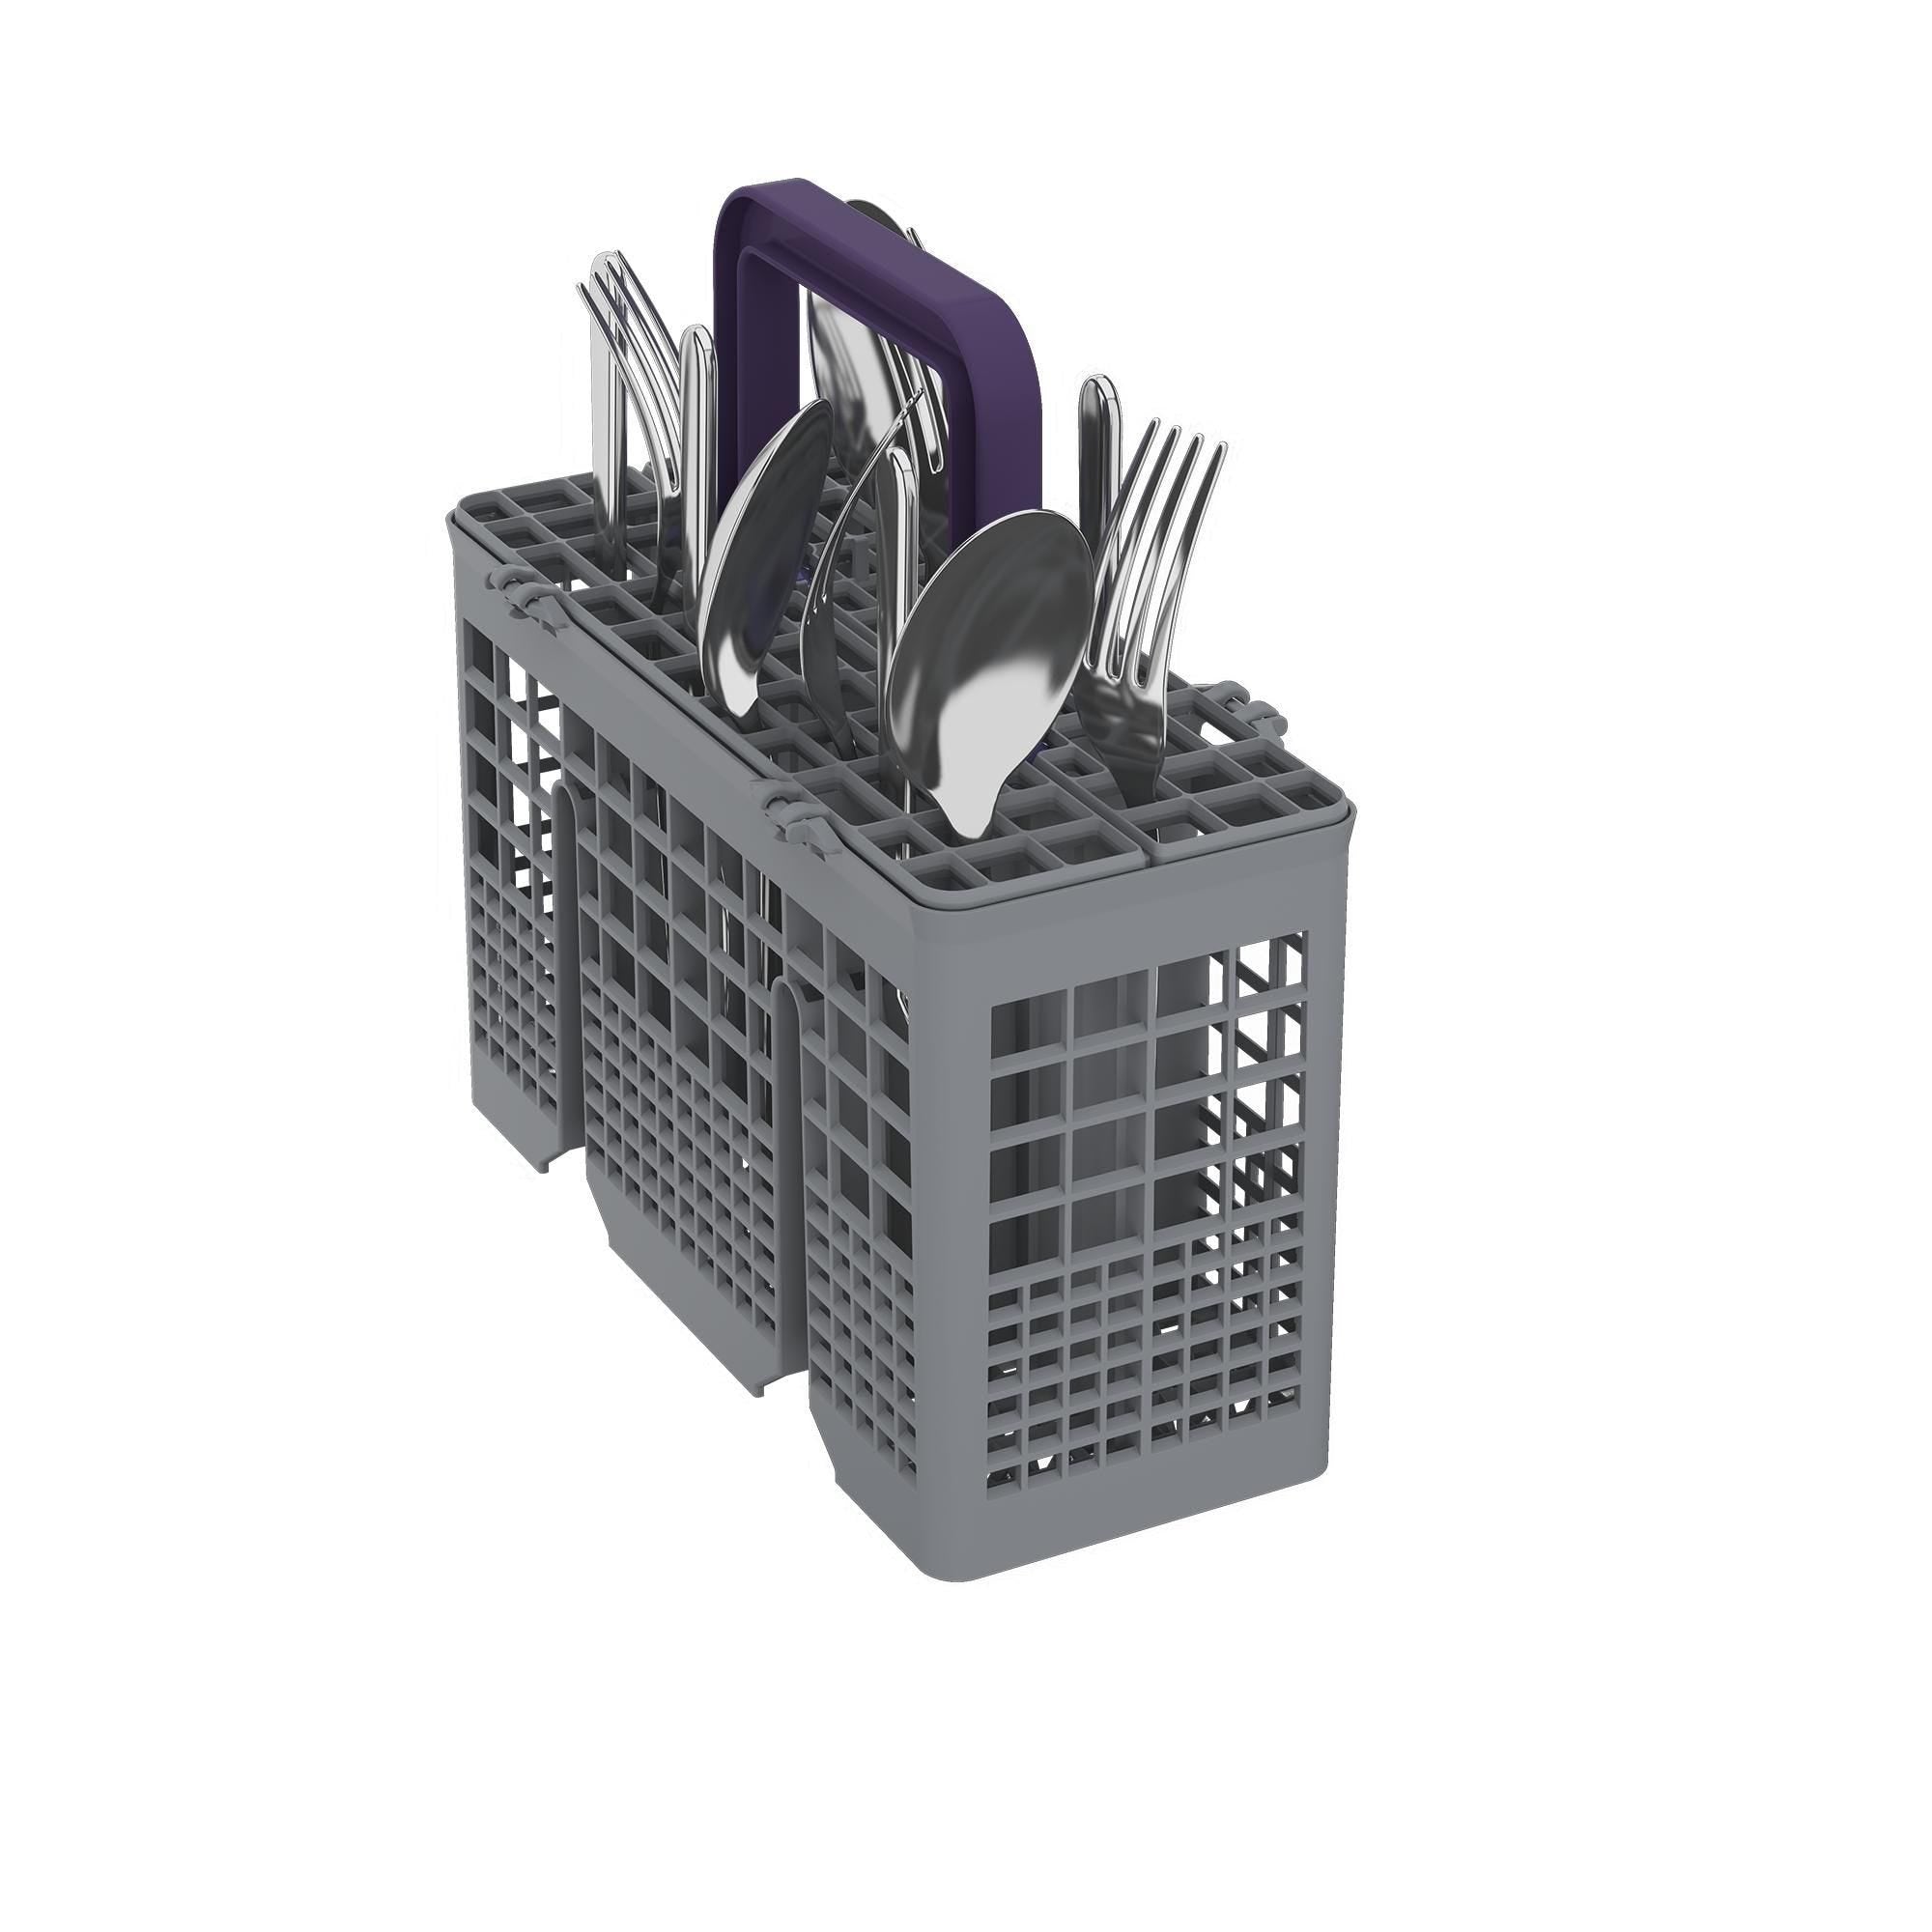 Beko Digital Dishwasher, 10 Place Settings, 5 Programs, Silver - DVS05020S